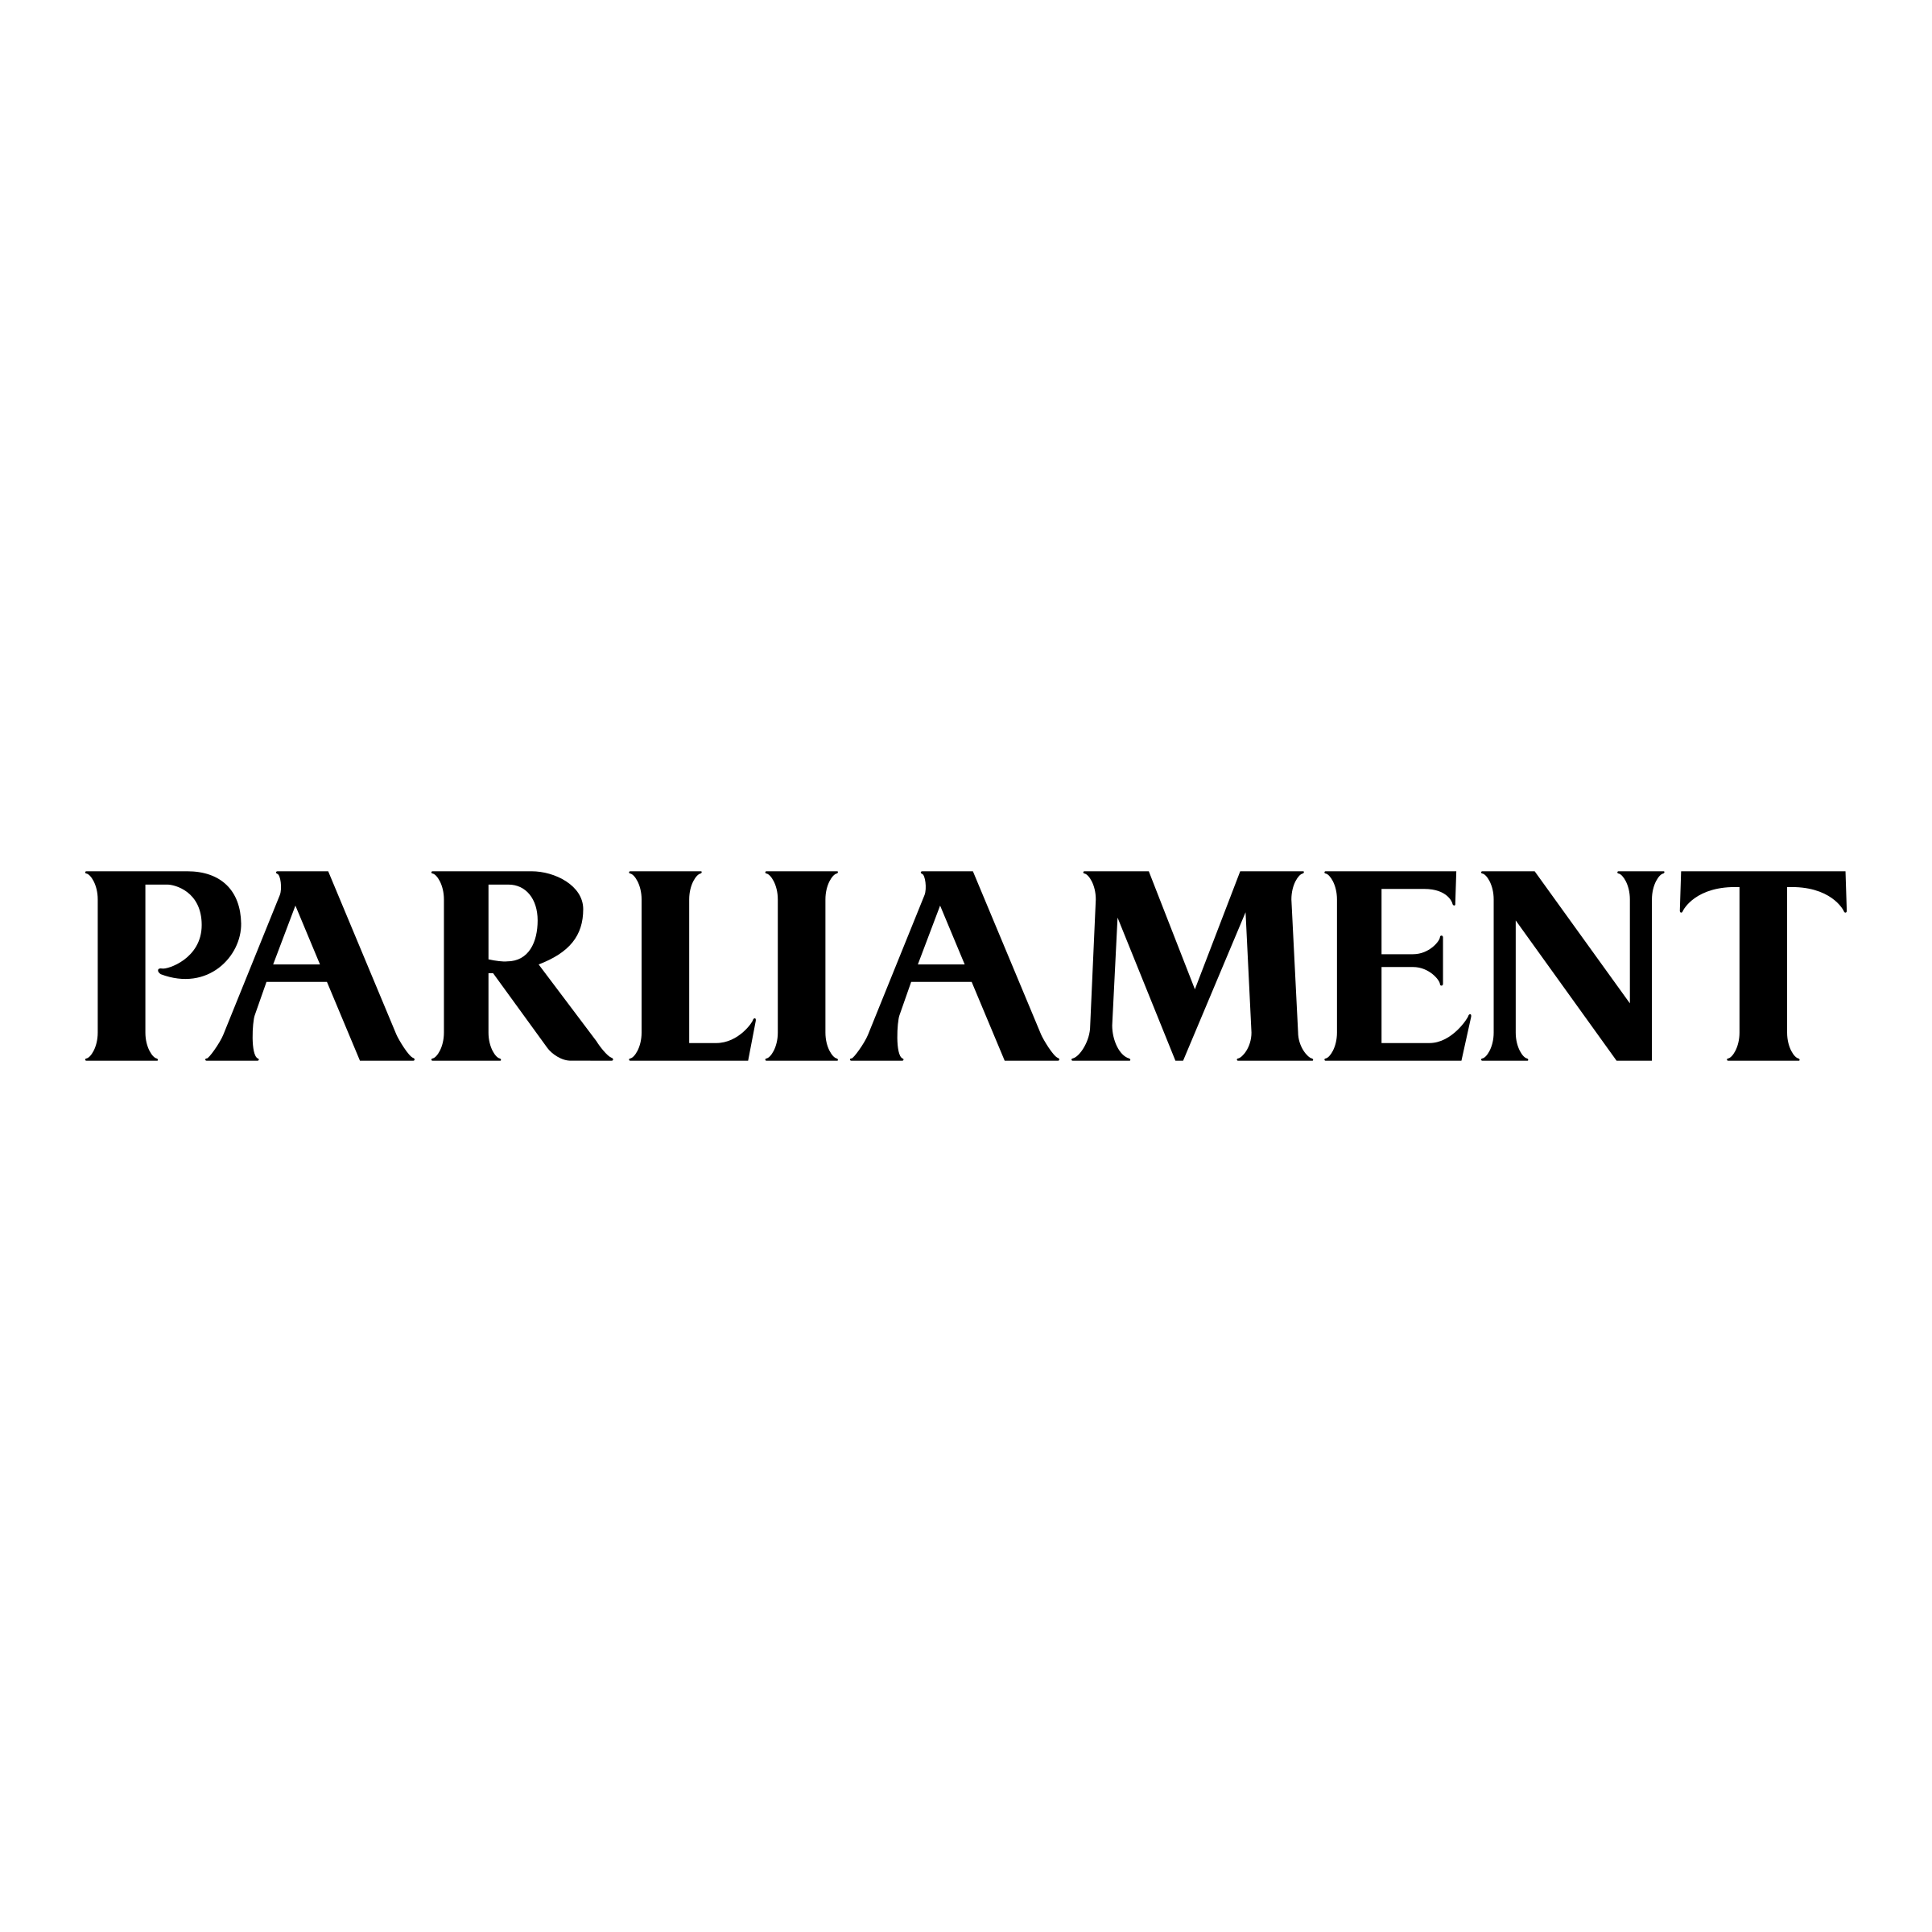 Parliament Logo - Parliament Logo PNG Transparent & SVG Vector